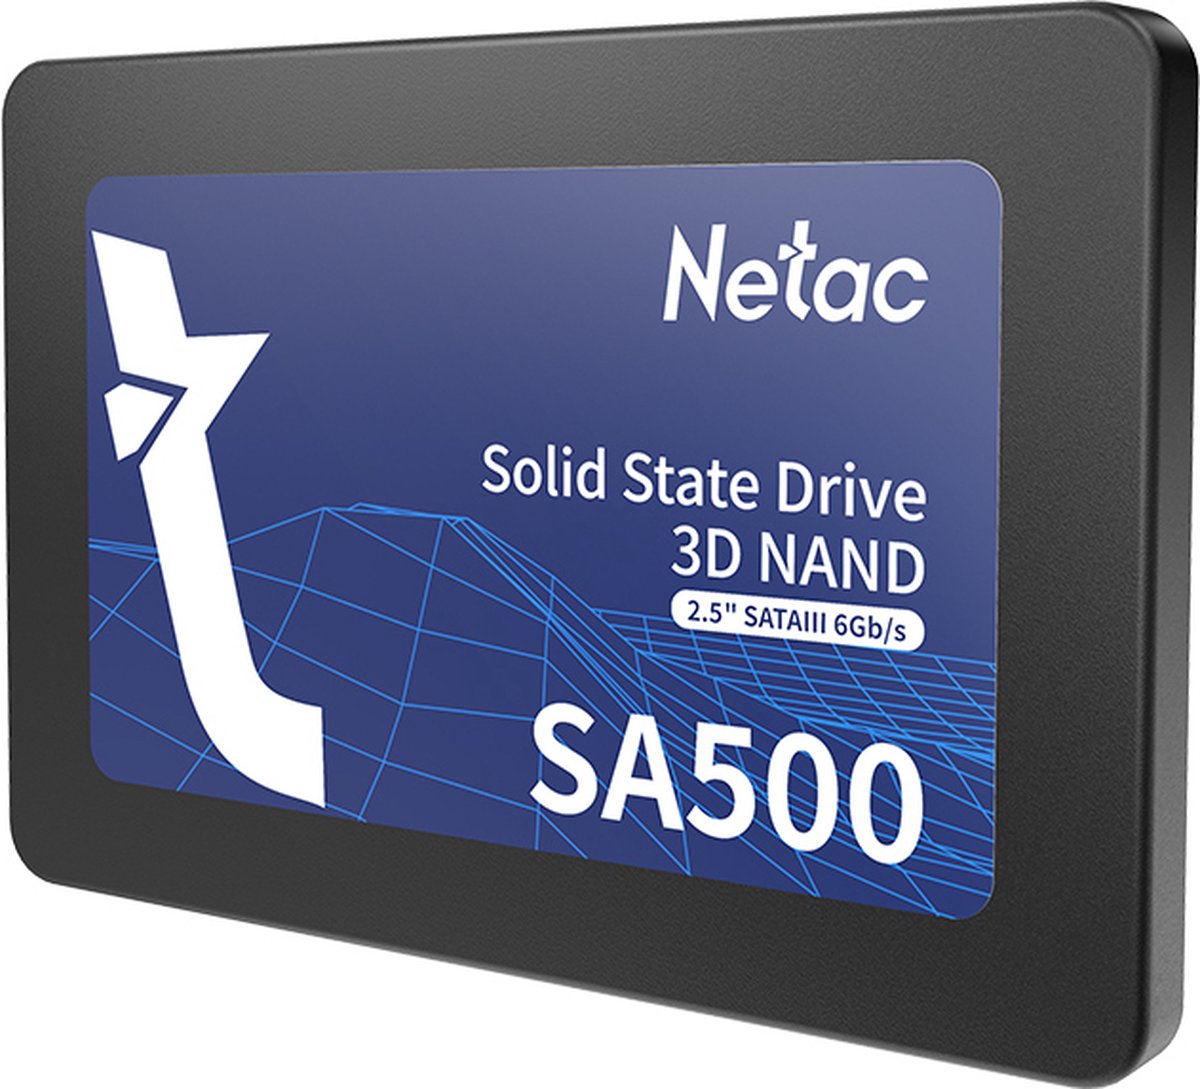 Netac SA500 2.5 SATAIII 3D NAND SSD 240GB, R/W up to 520/450MB/s